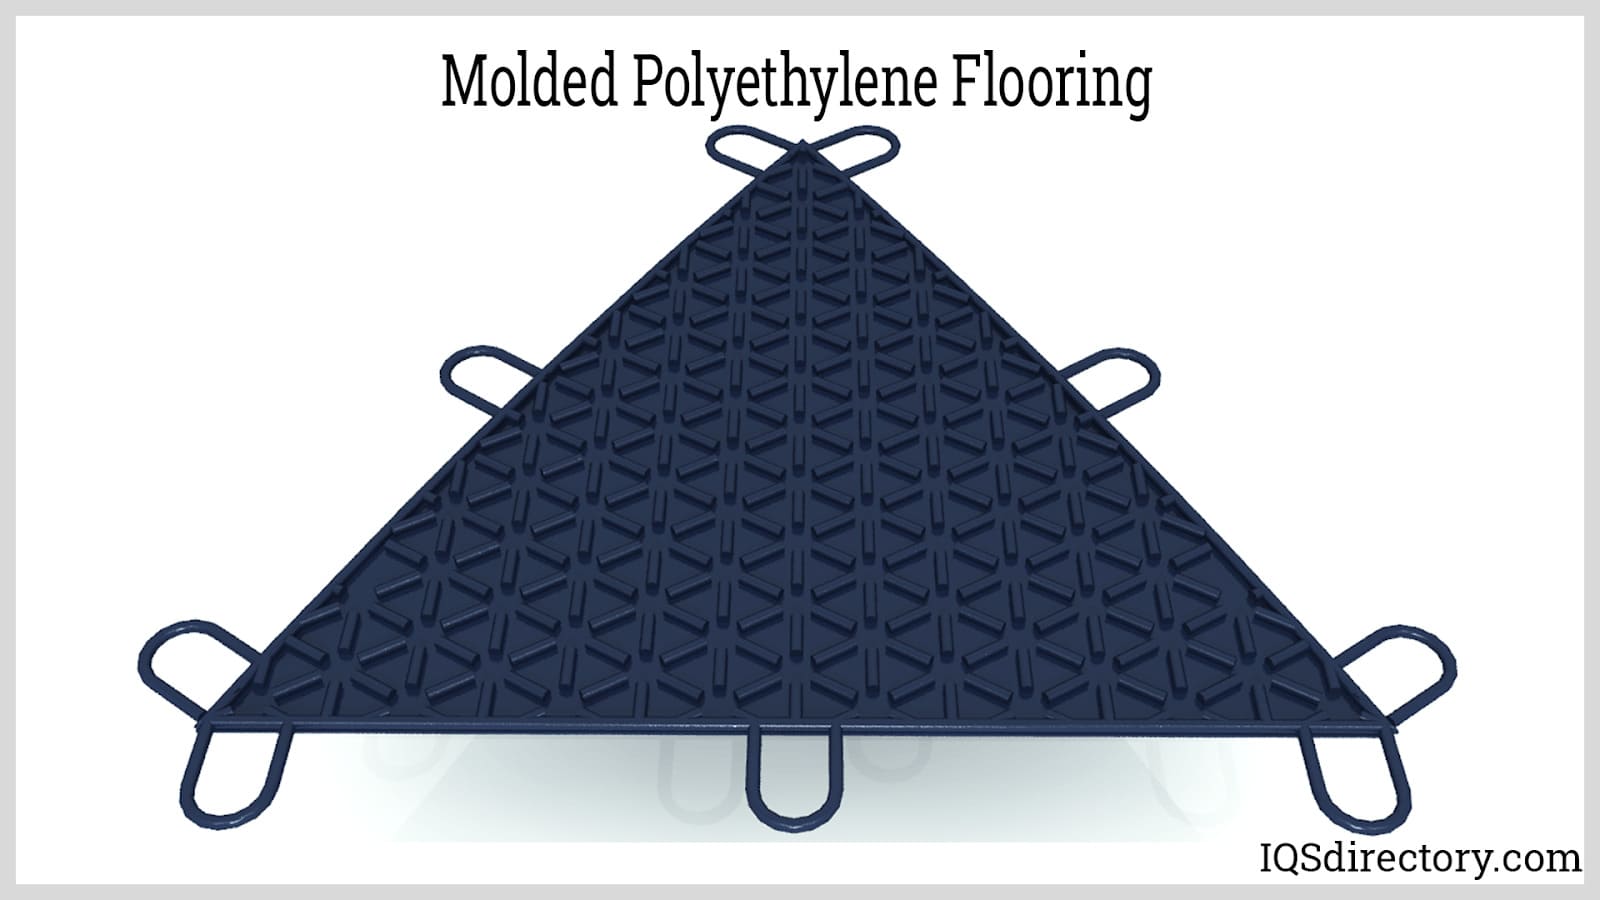 Molded Polyethylene Flooring